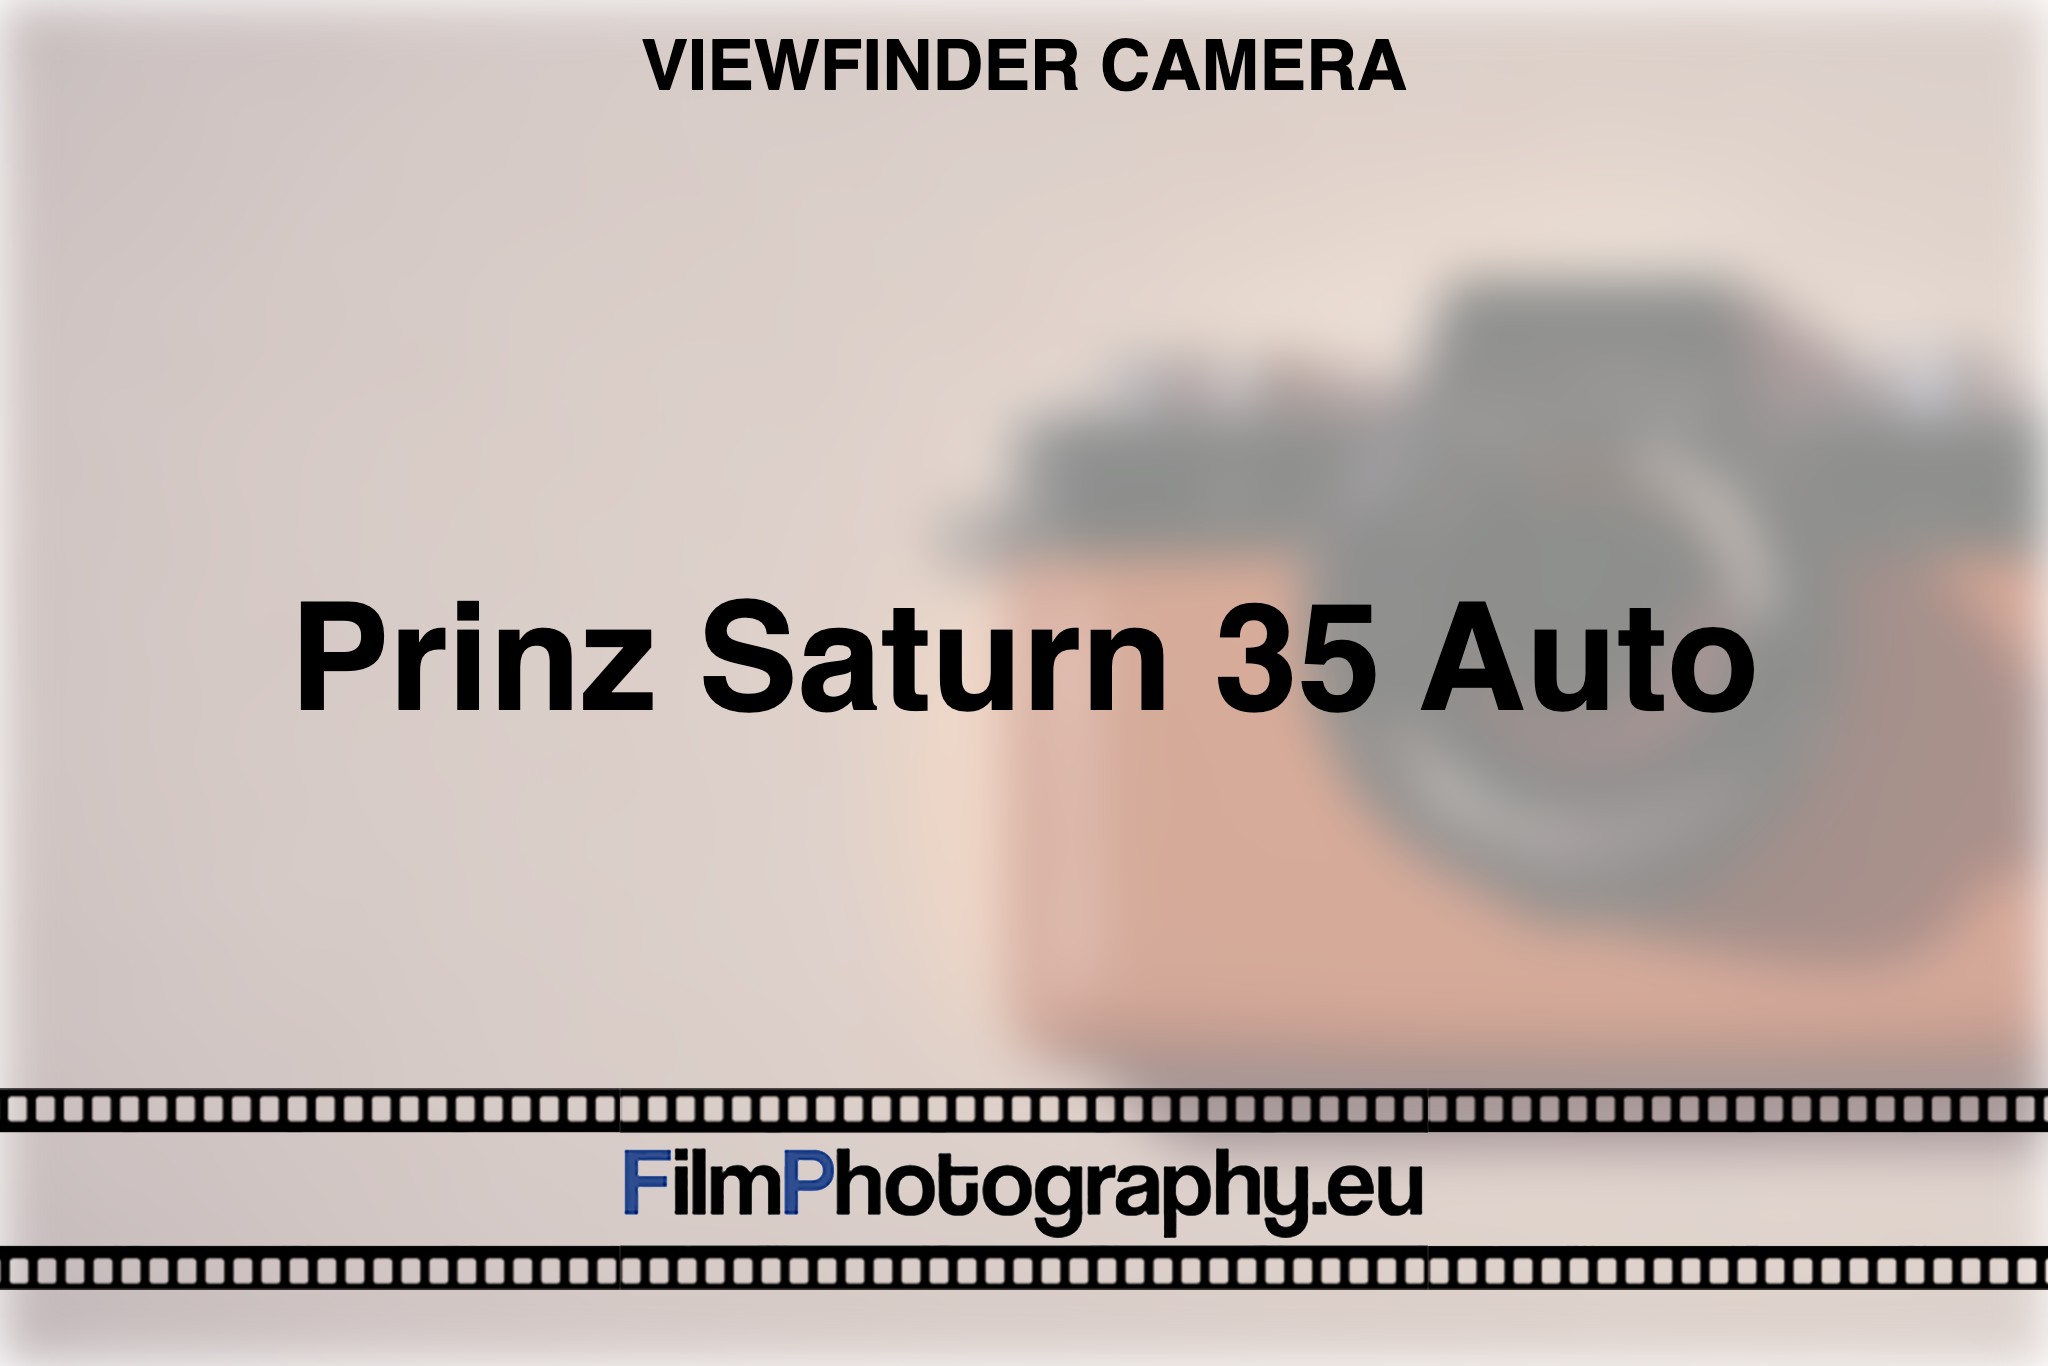 prinz-saturn-35-auto-viewfinder-camera-bnv